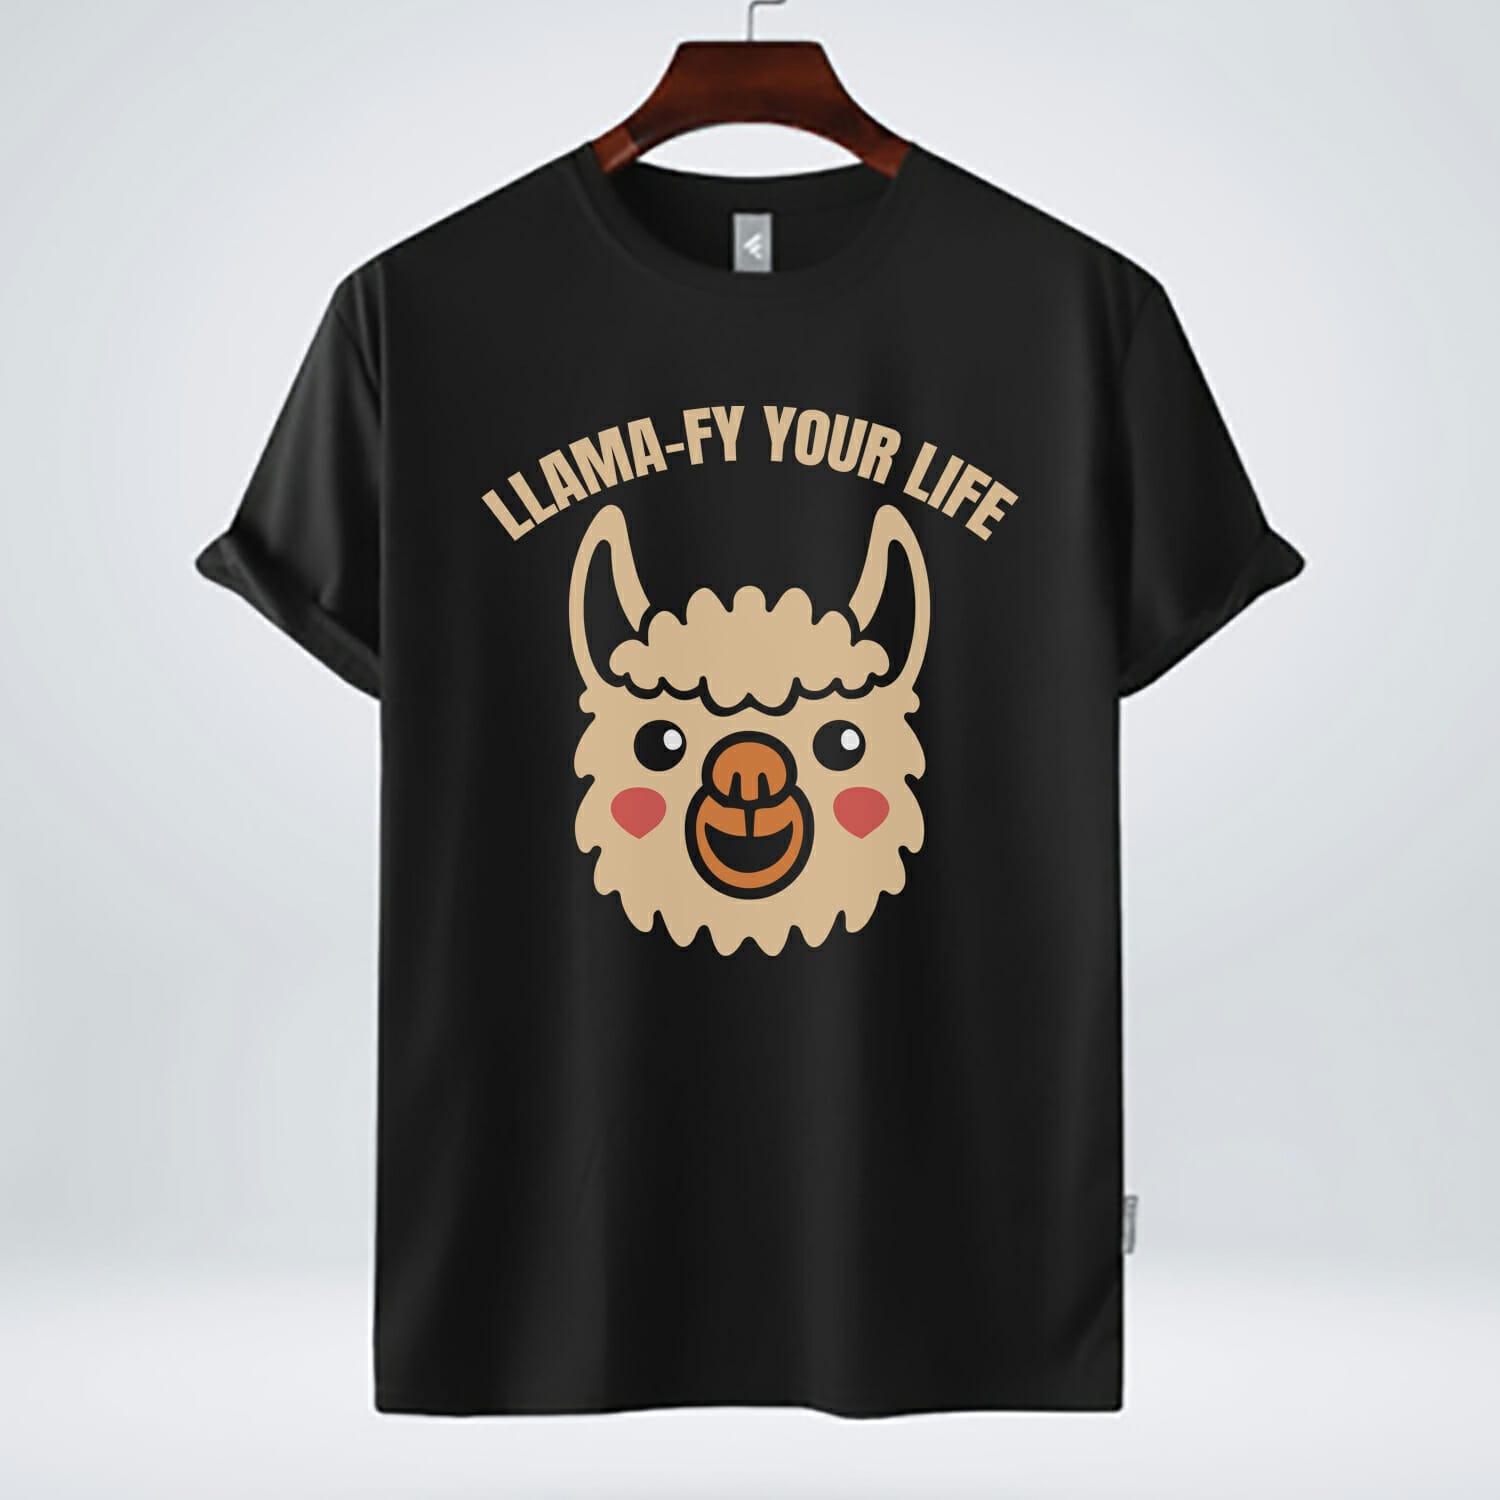 Llama-Fy Your Life T-Shirt Design